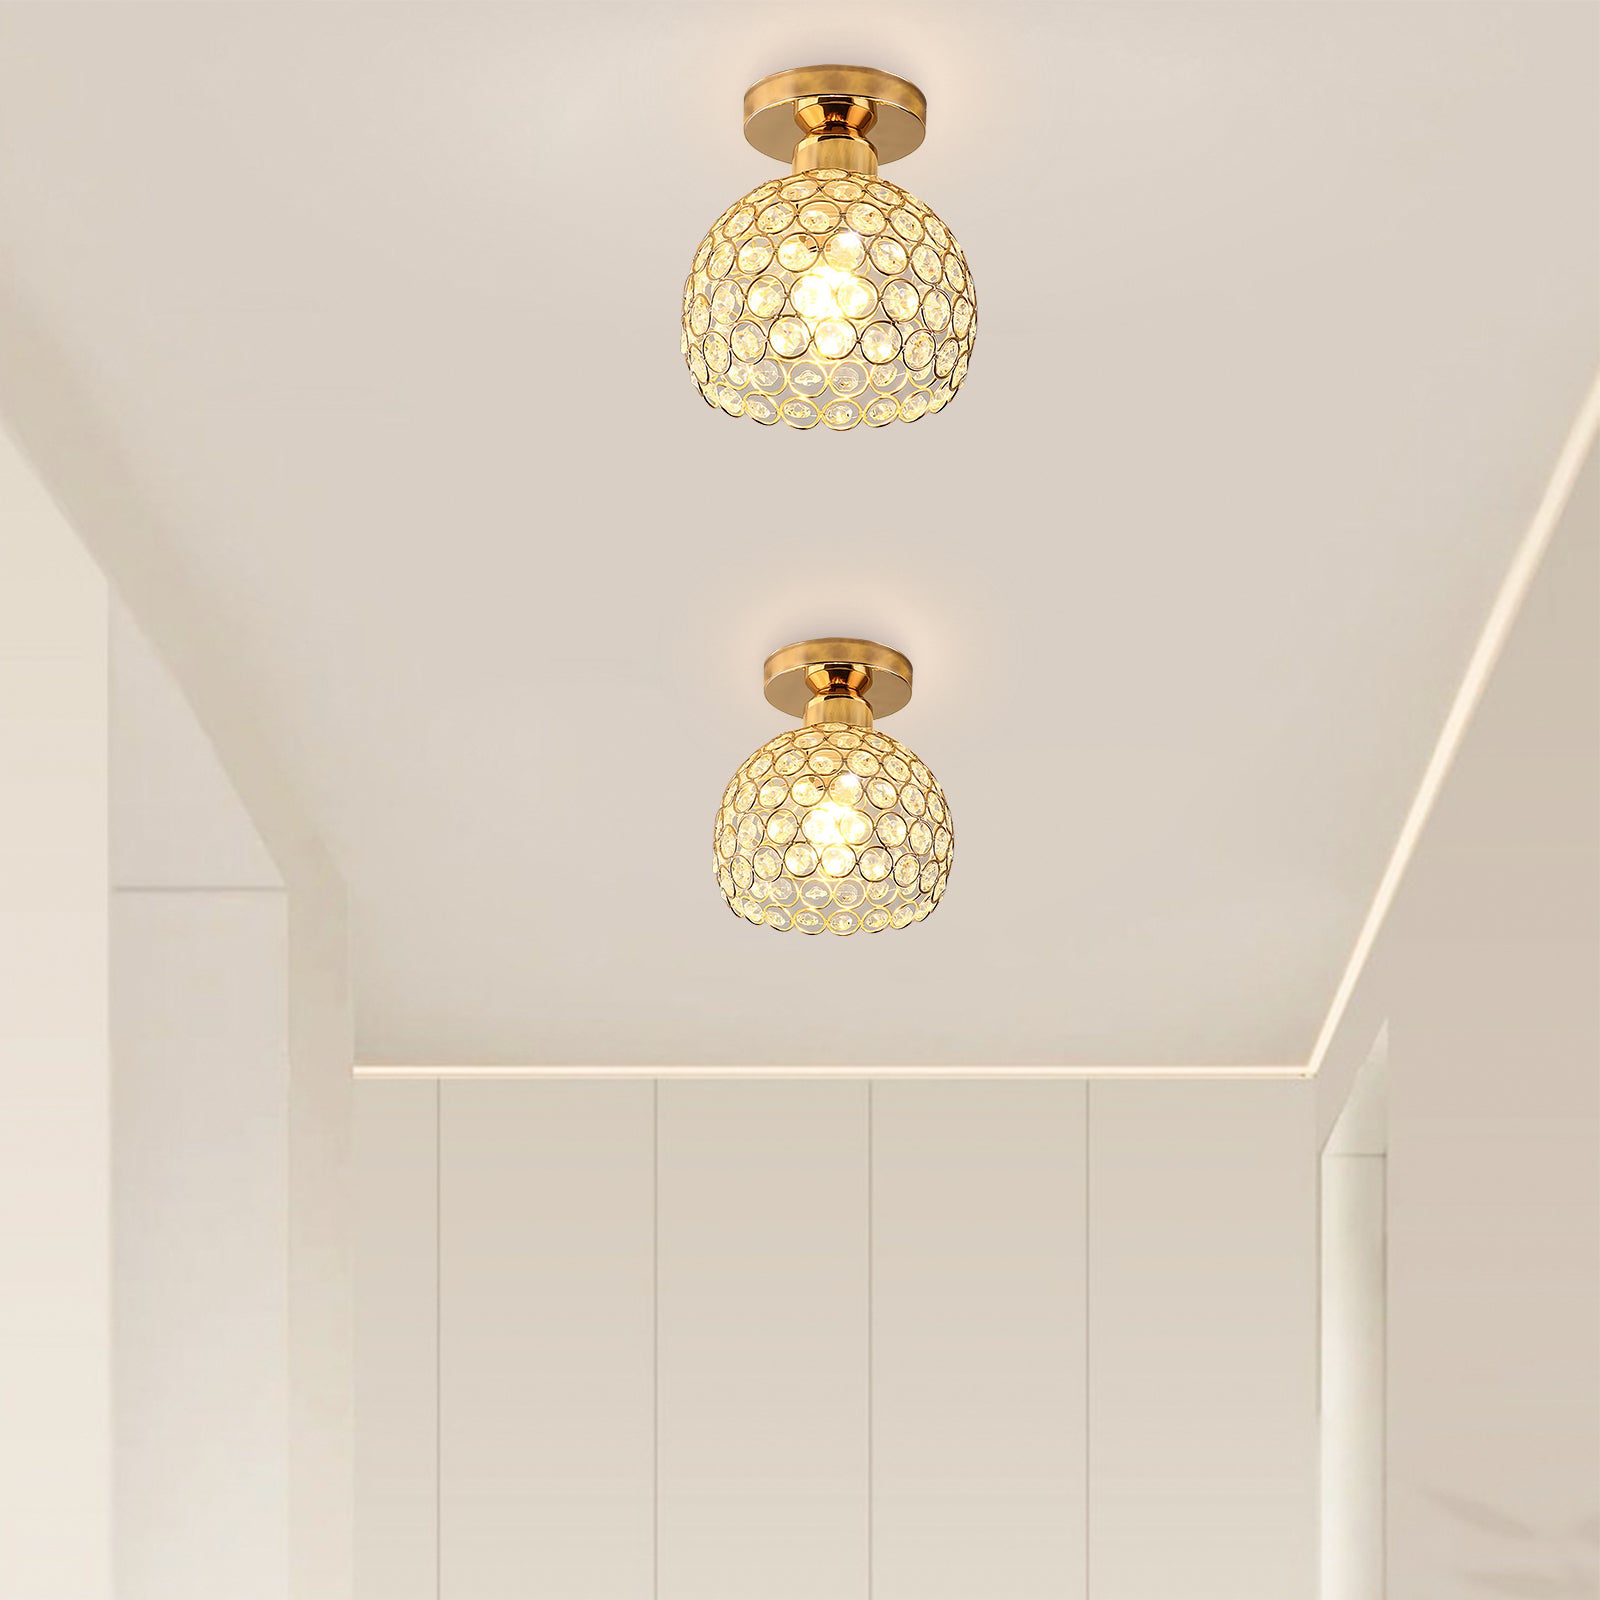 Contemporary Design Gold Glass Hallway Ceiling Lighting